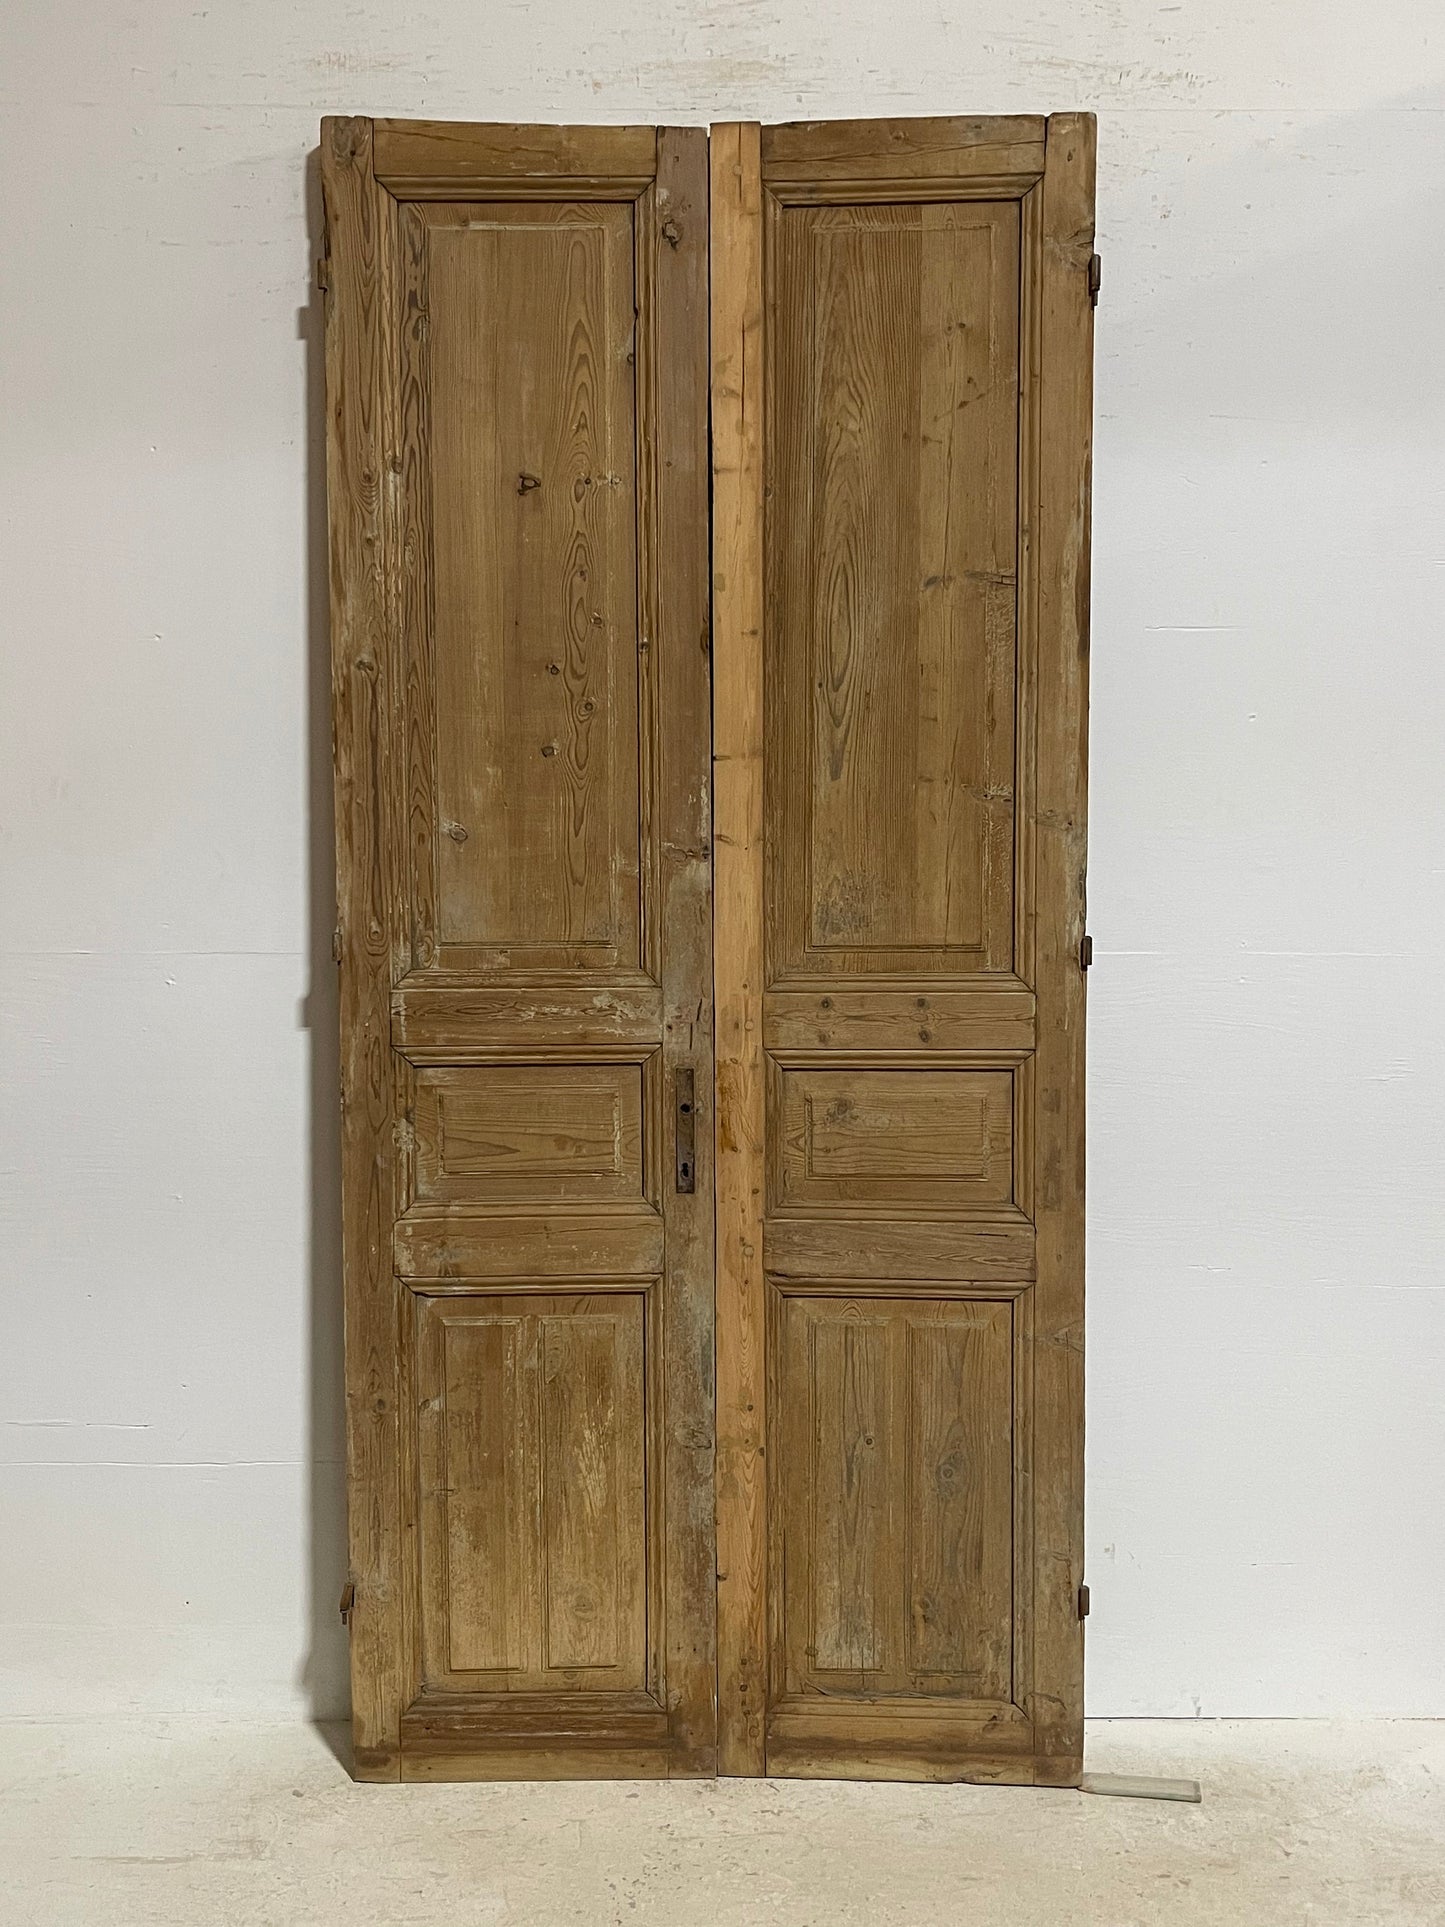 Antique French panel doors (94.5x42.5) G0172s